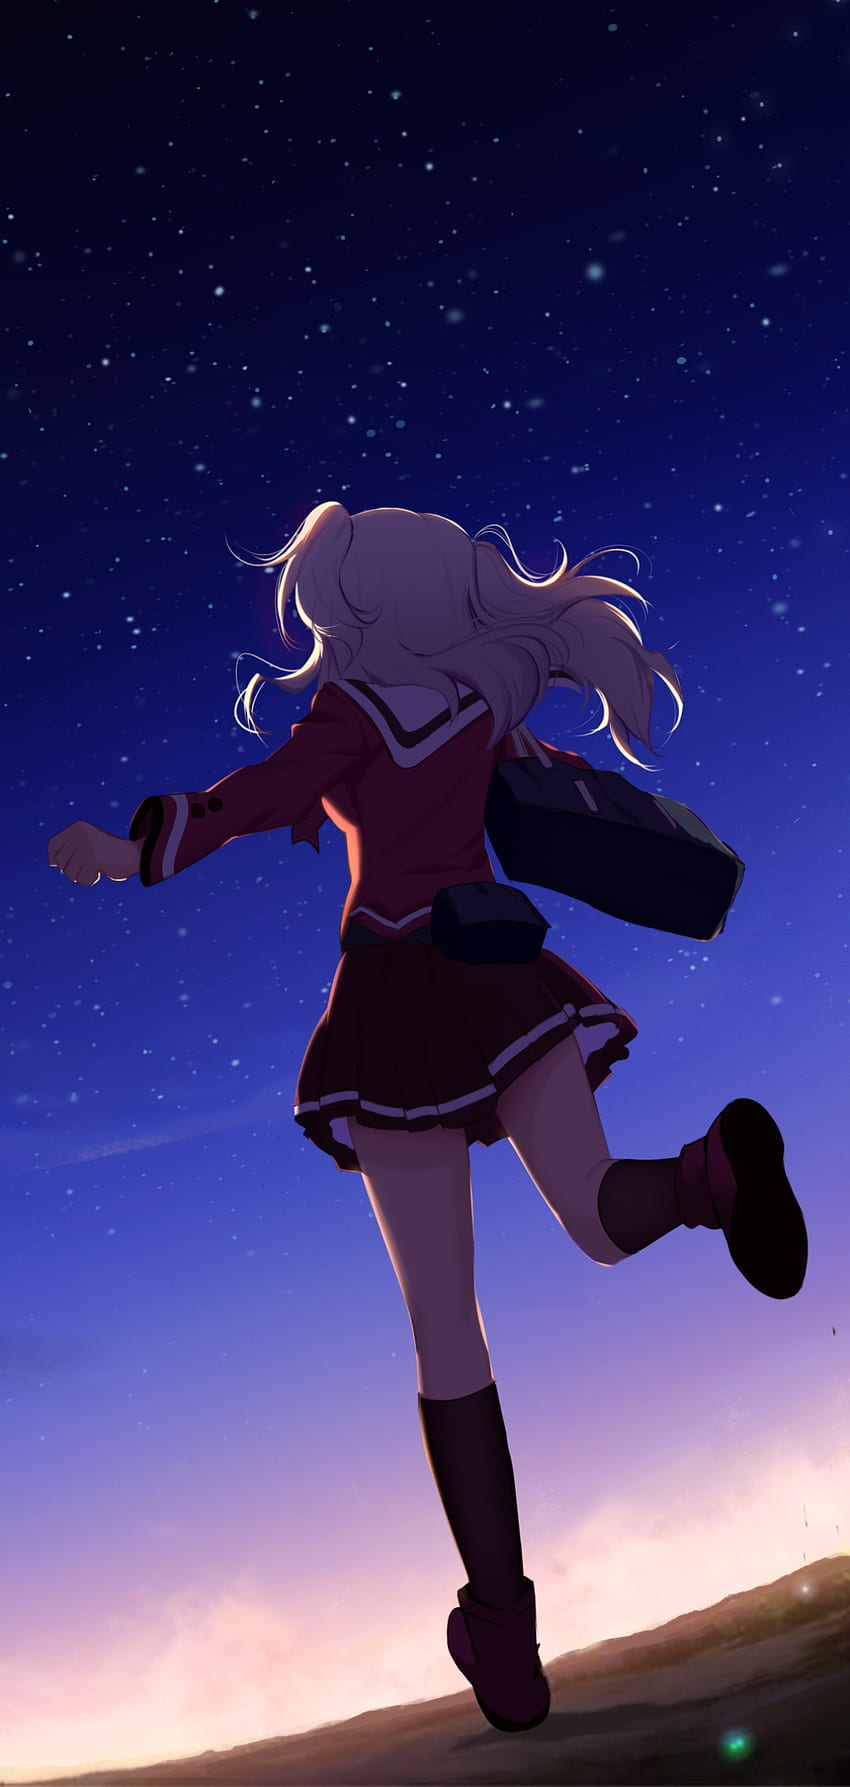 Yumiko Dream's of Charlotte | Anime Solution